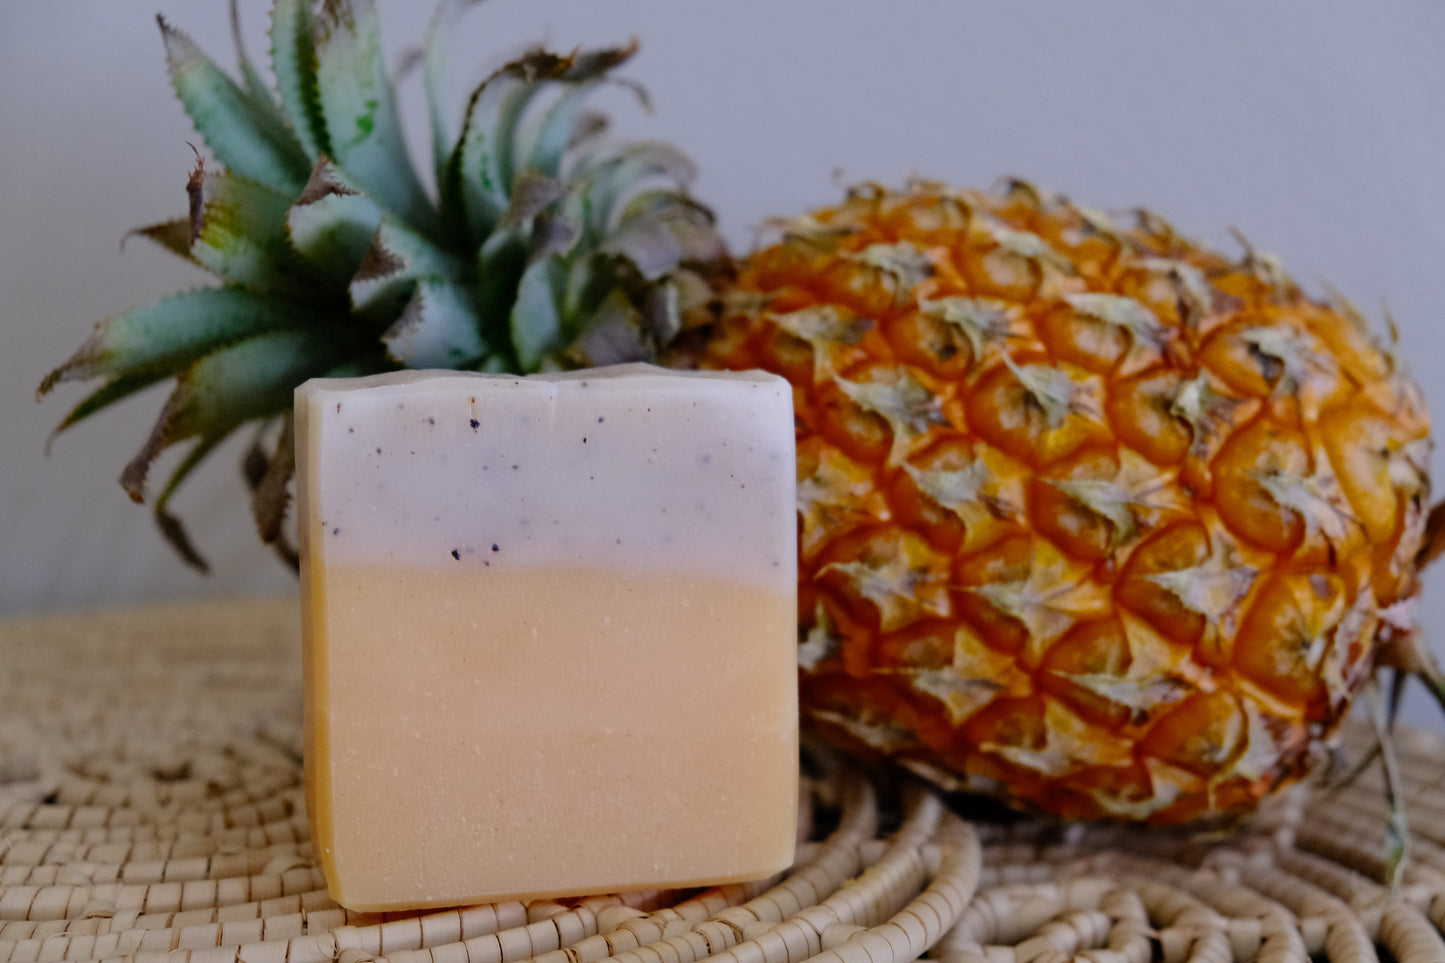 Lemongrass Sunshine ~ Natural Soap Bar